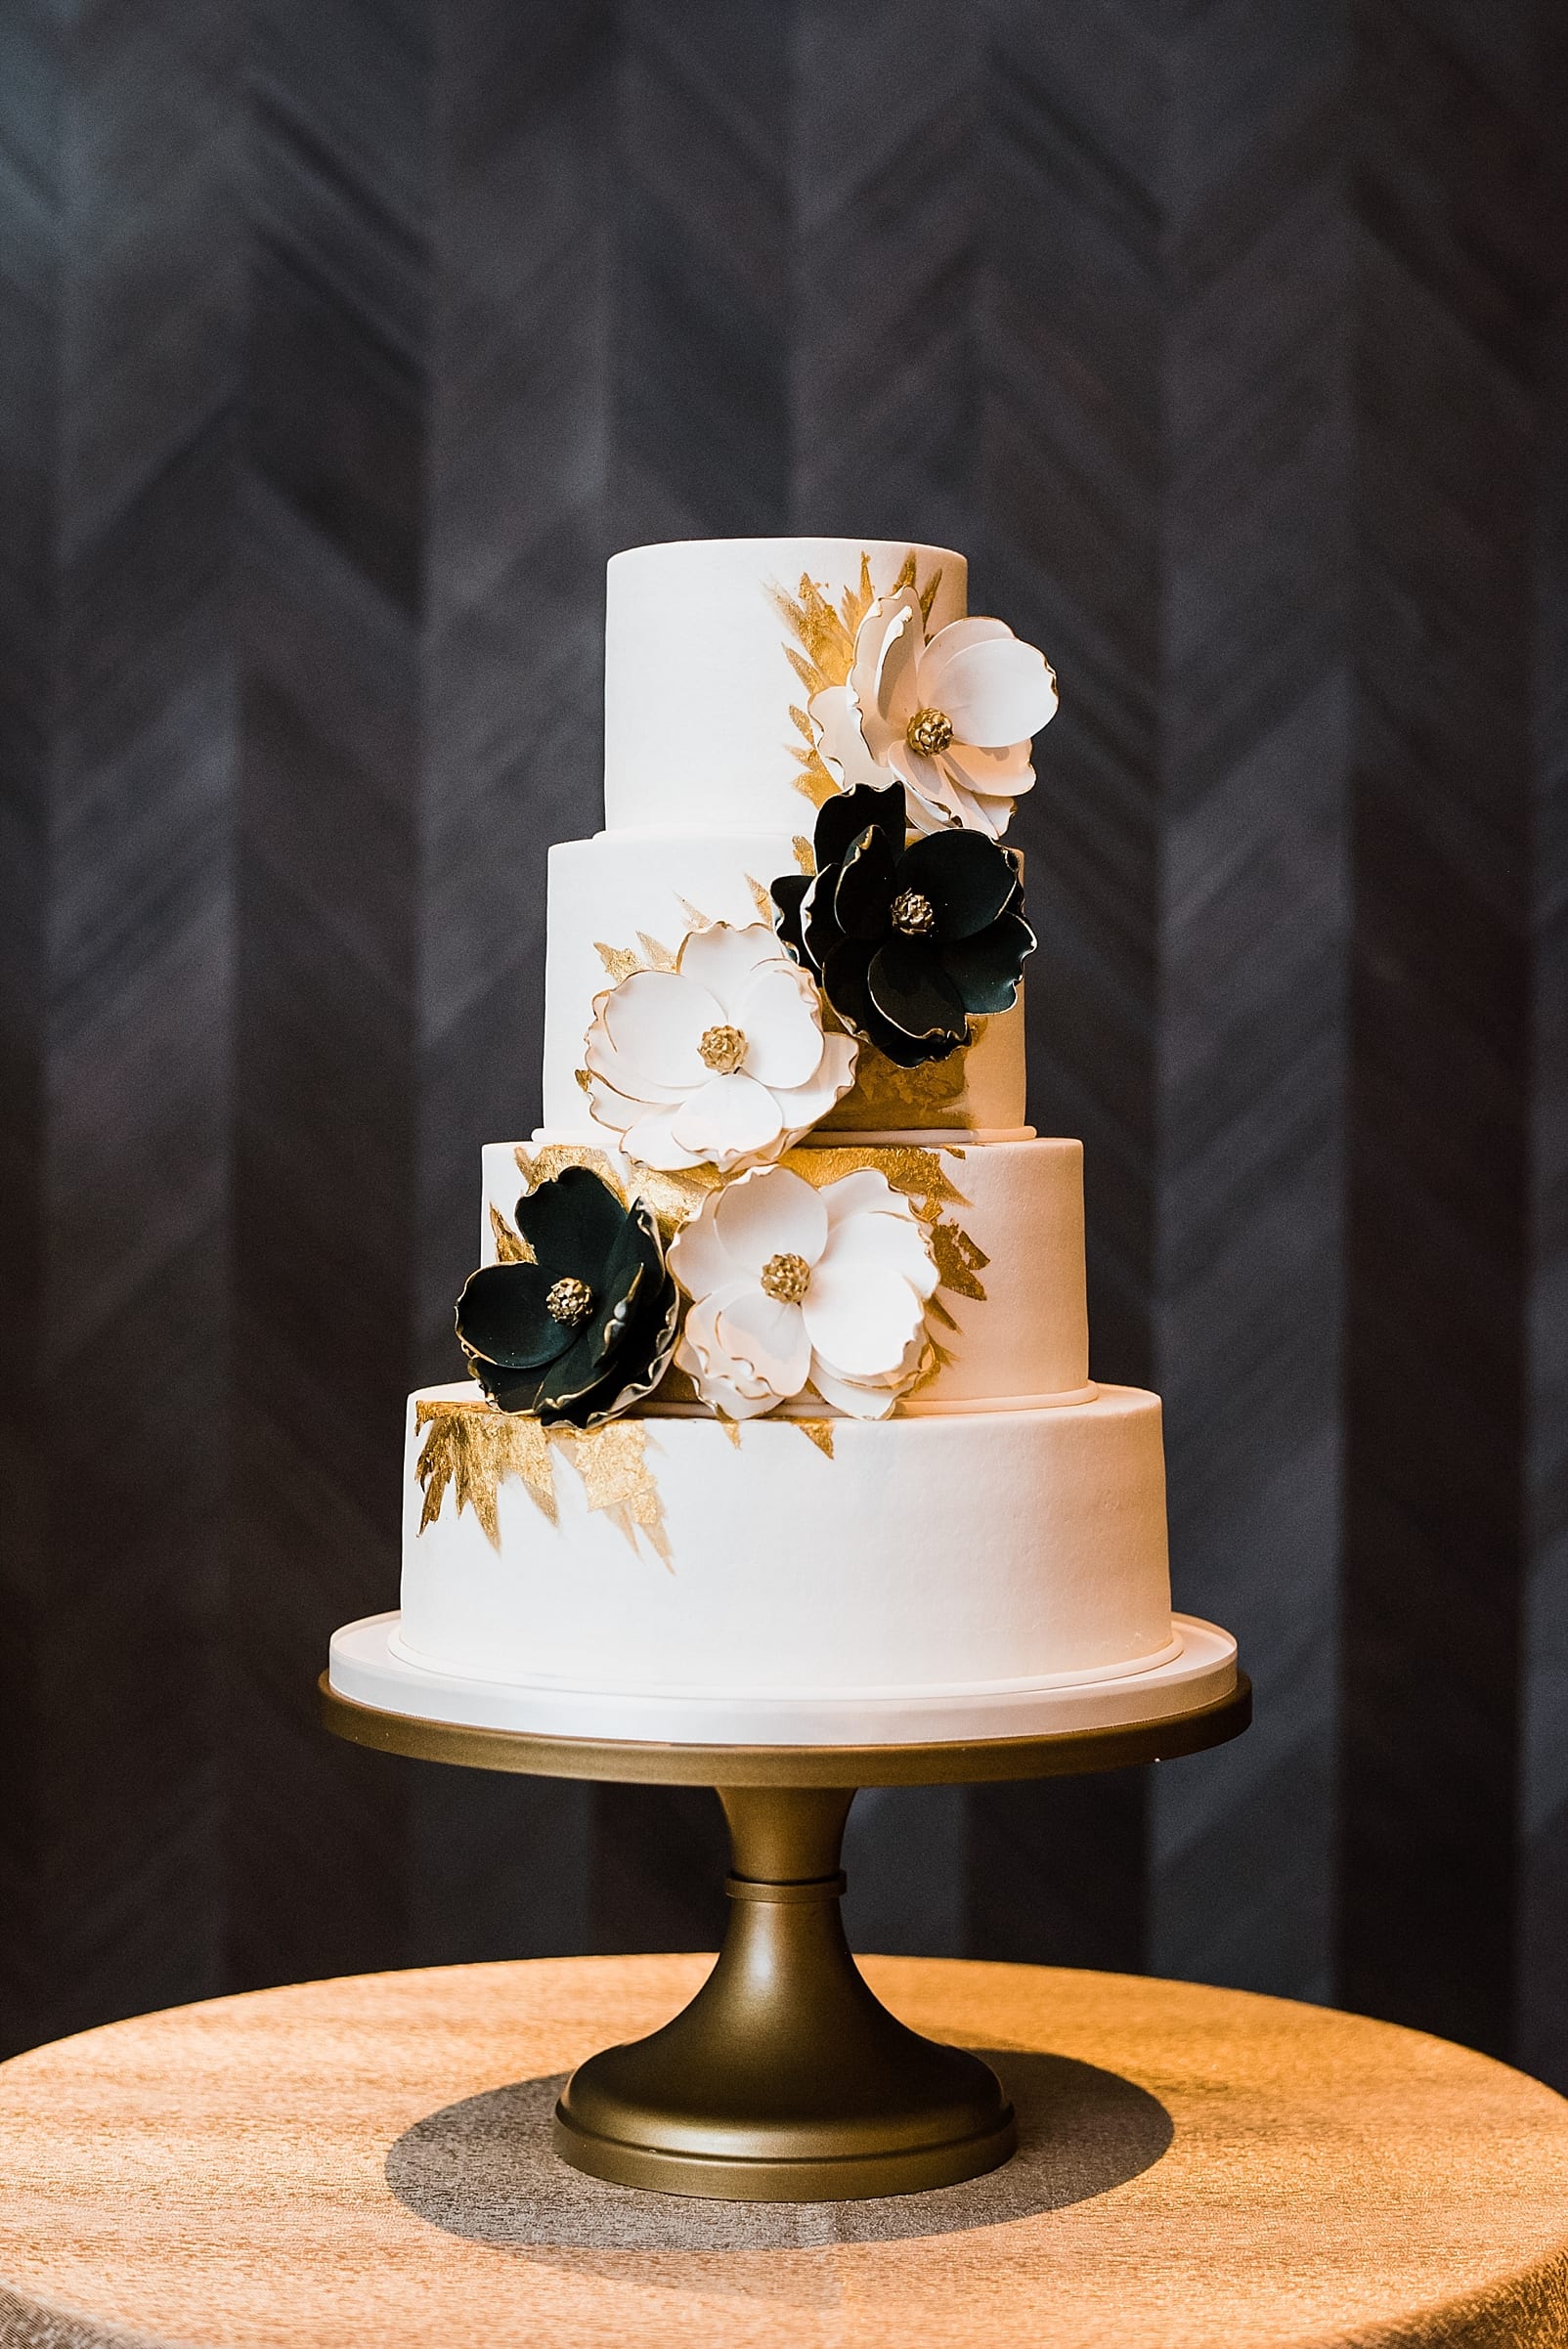 raleigh renaissance wedding photographer black and white wedding cake modern wedding cake flowers on wedding cake photo